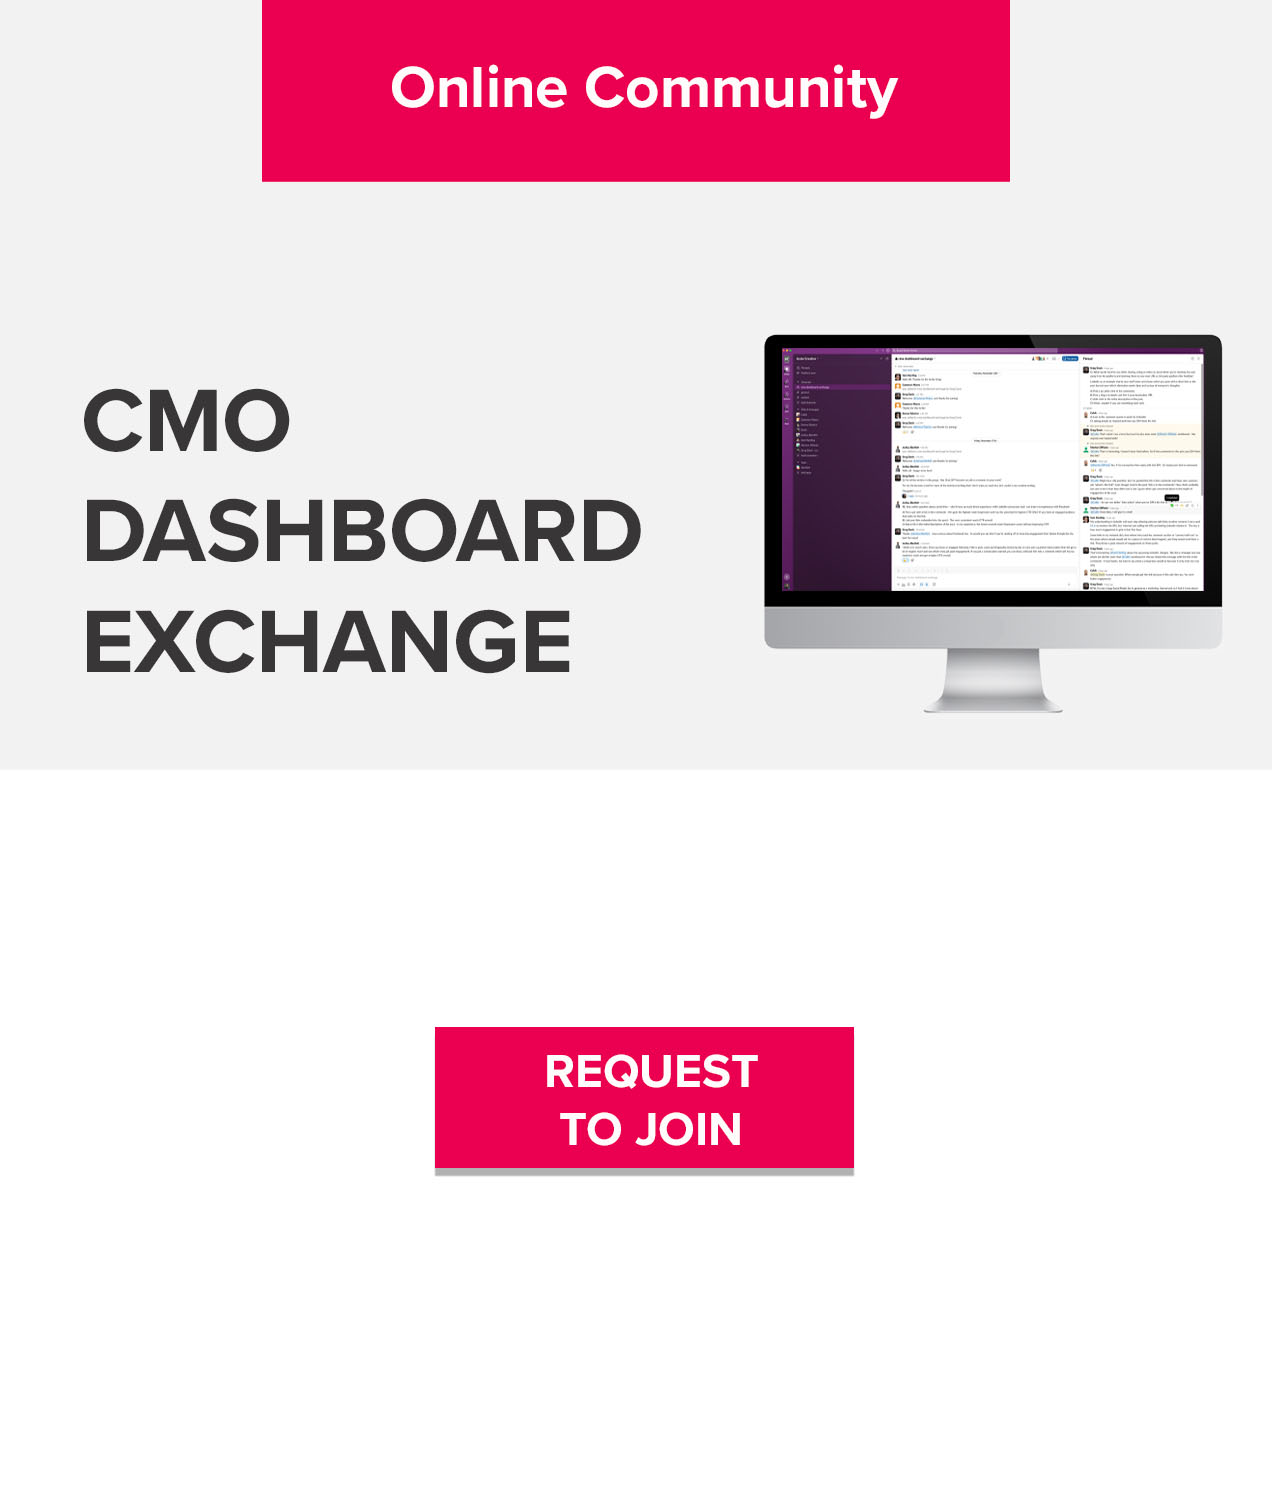 CMO Dashboard's CMO Exchange Online Community